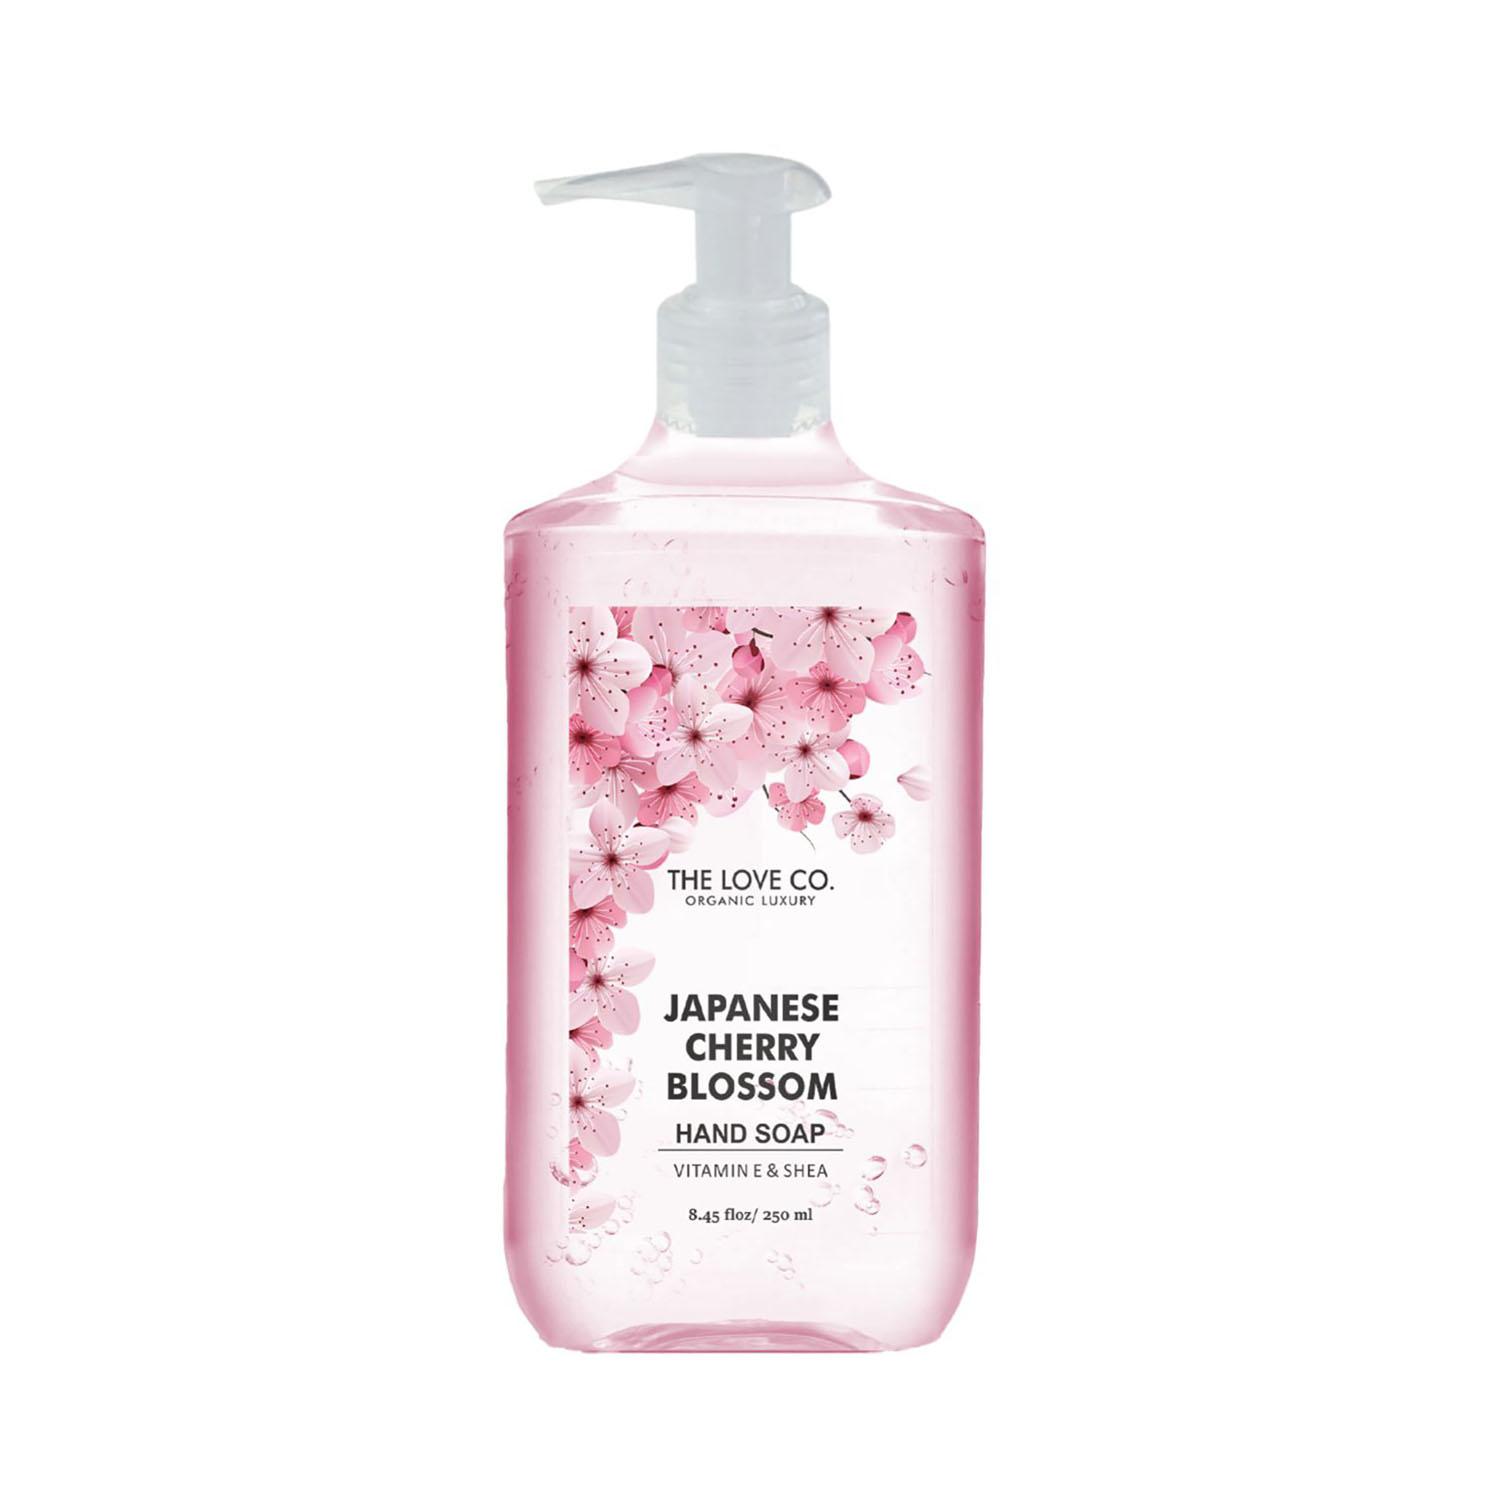 THE LOVE CO. Japanese Cherry Blossom Hand Soap For Moisturized Hands (250ml)